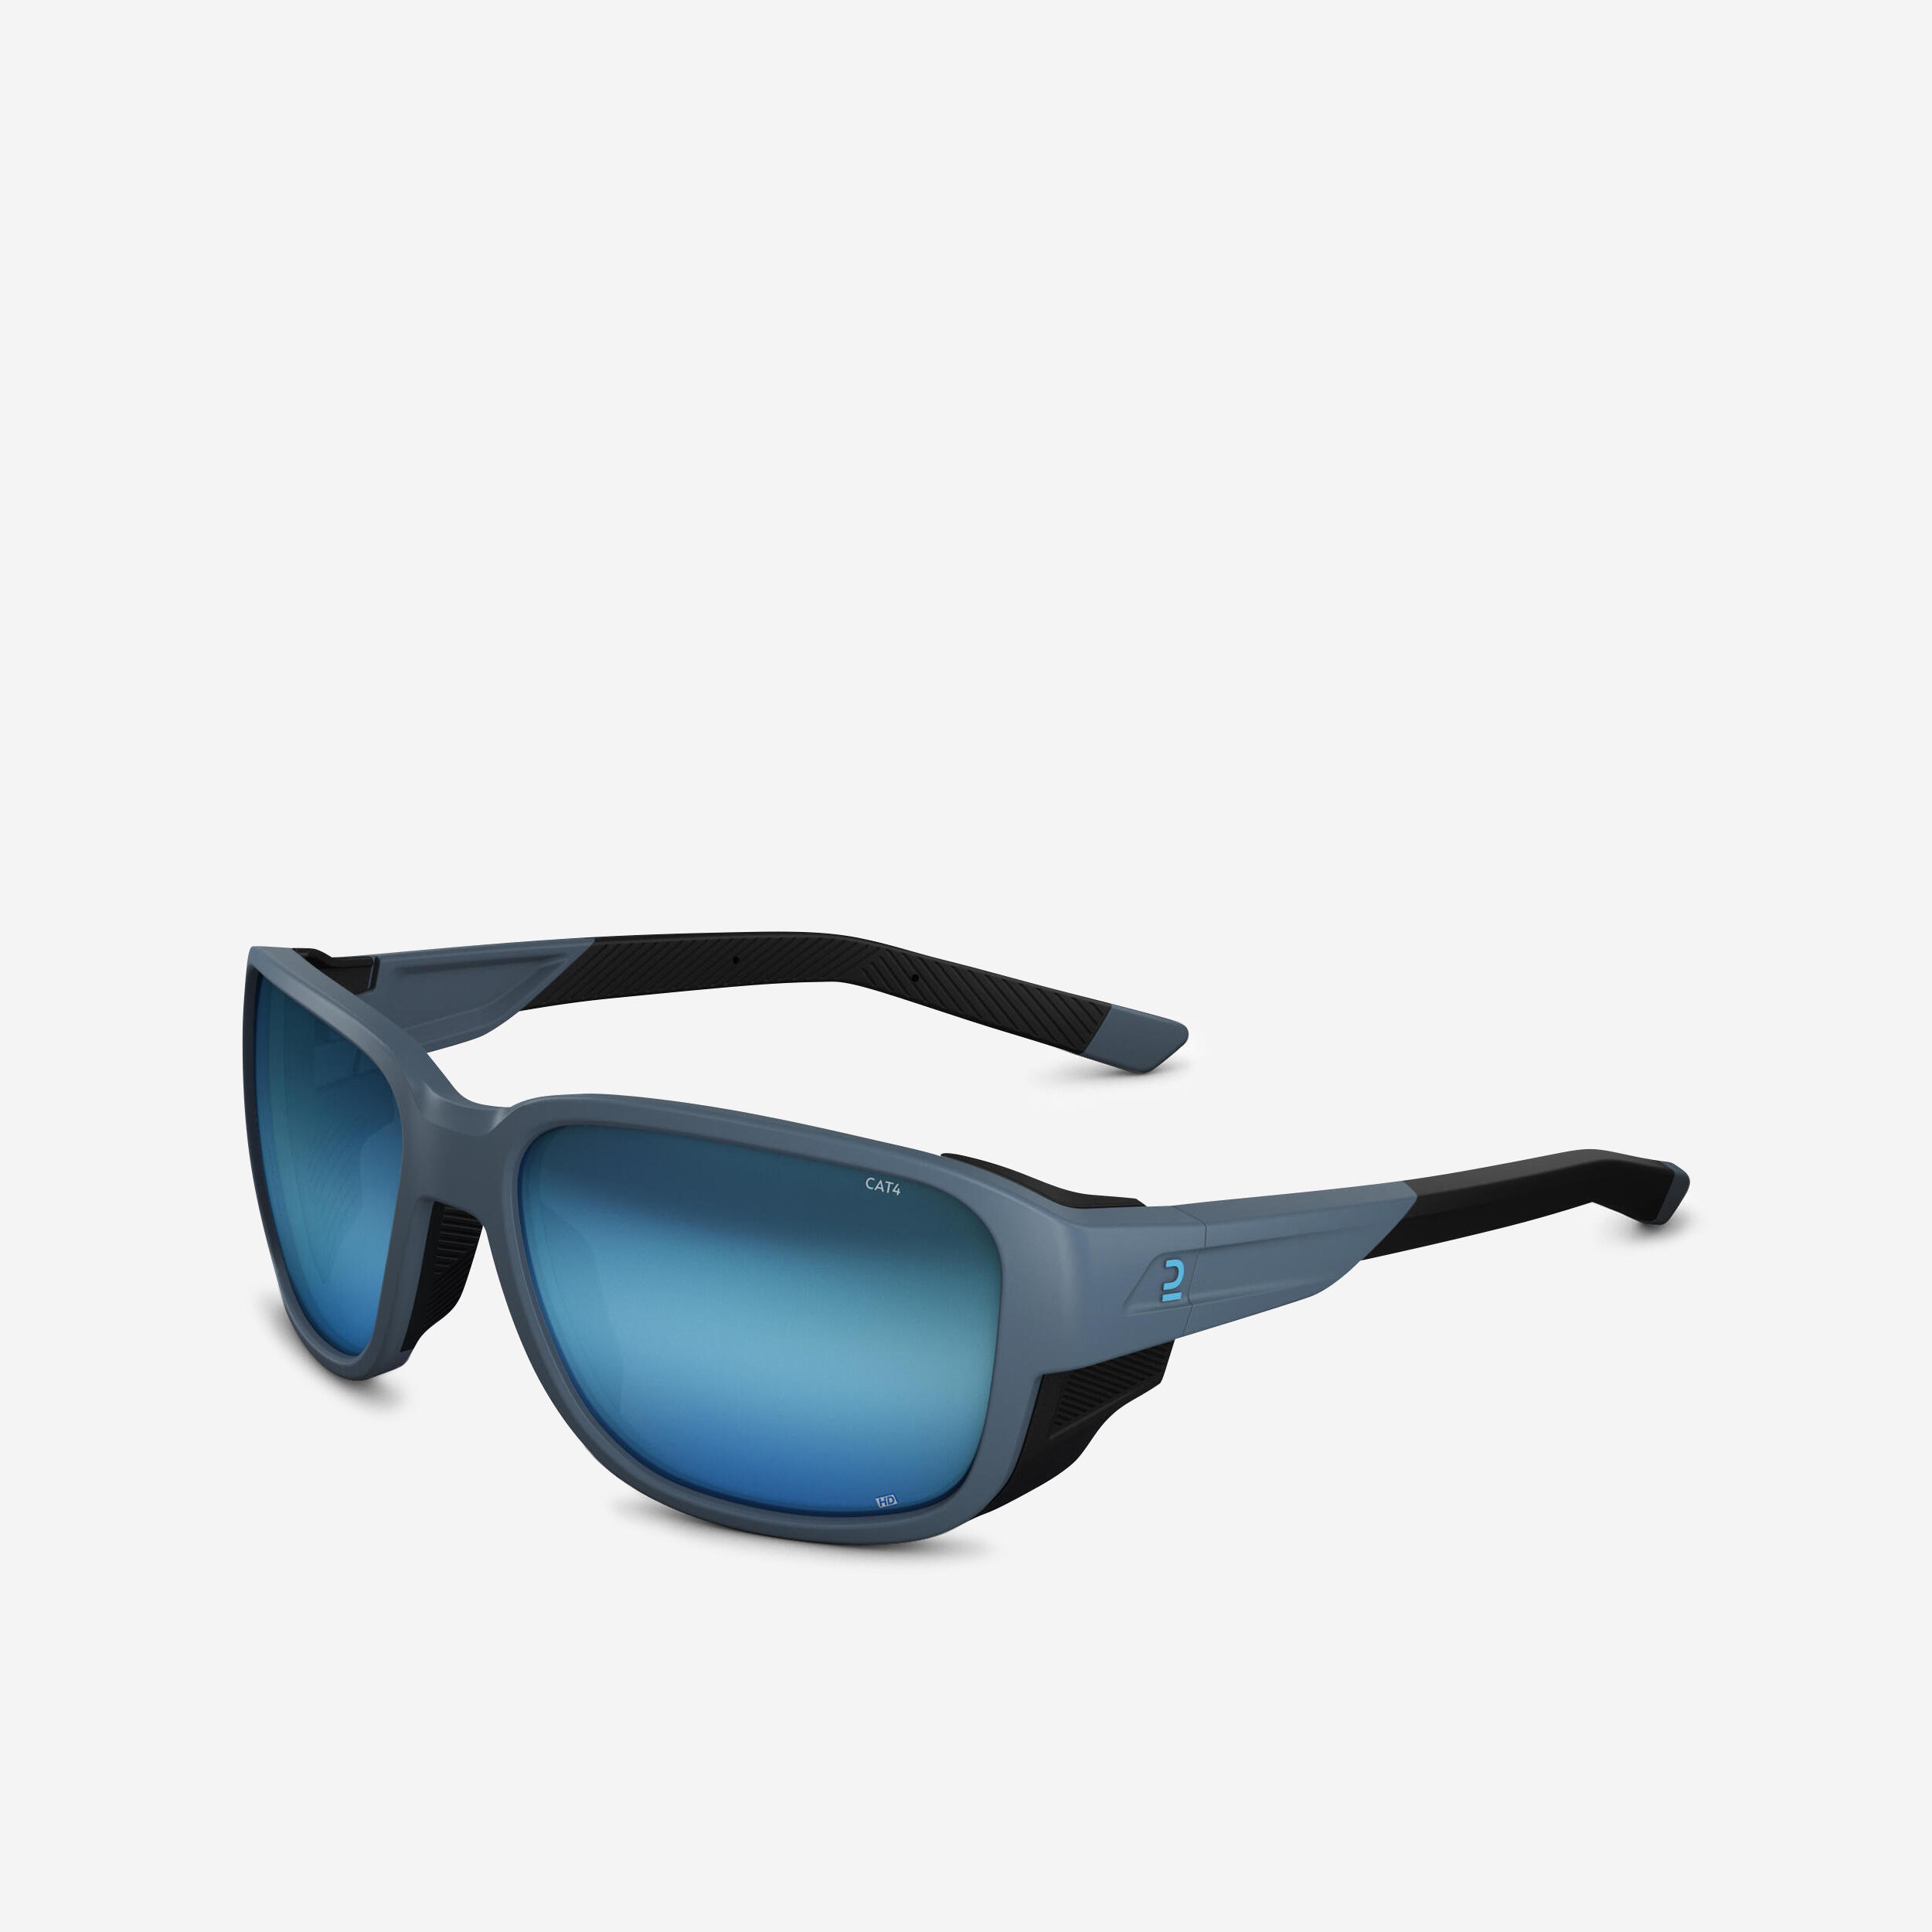 Hiking Sunglasses – MH 570 Grey